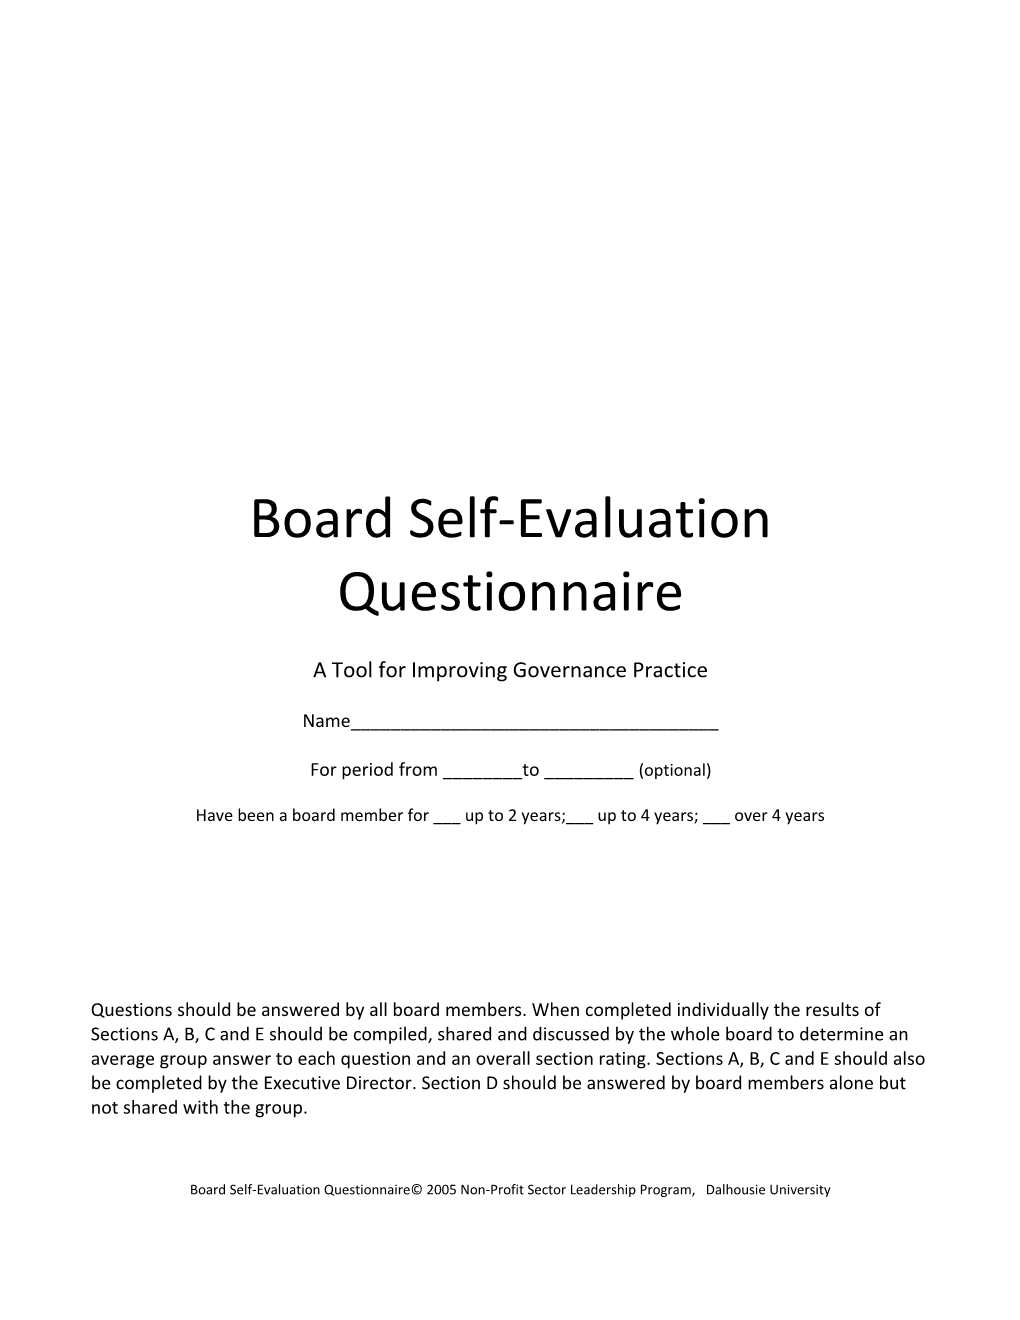 Board Self-Evaluation